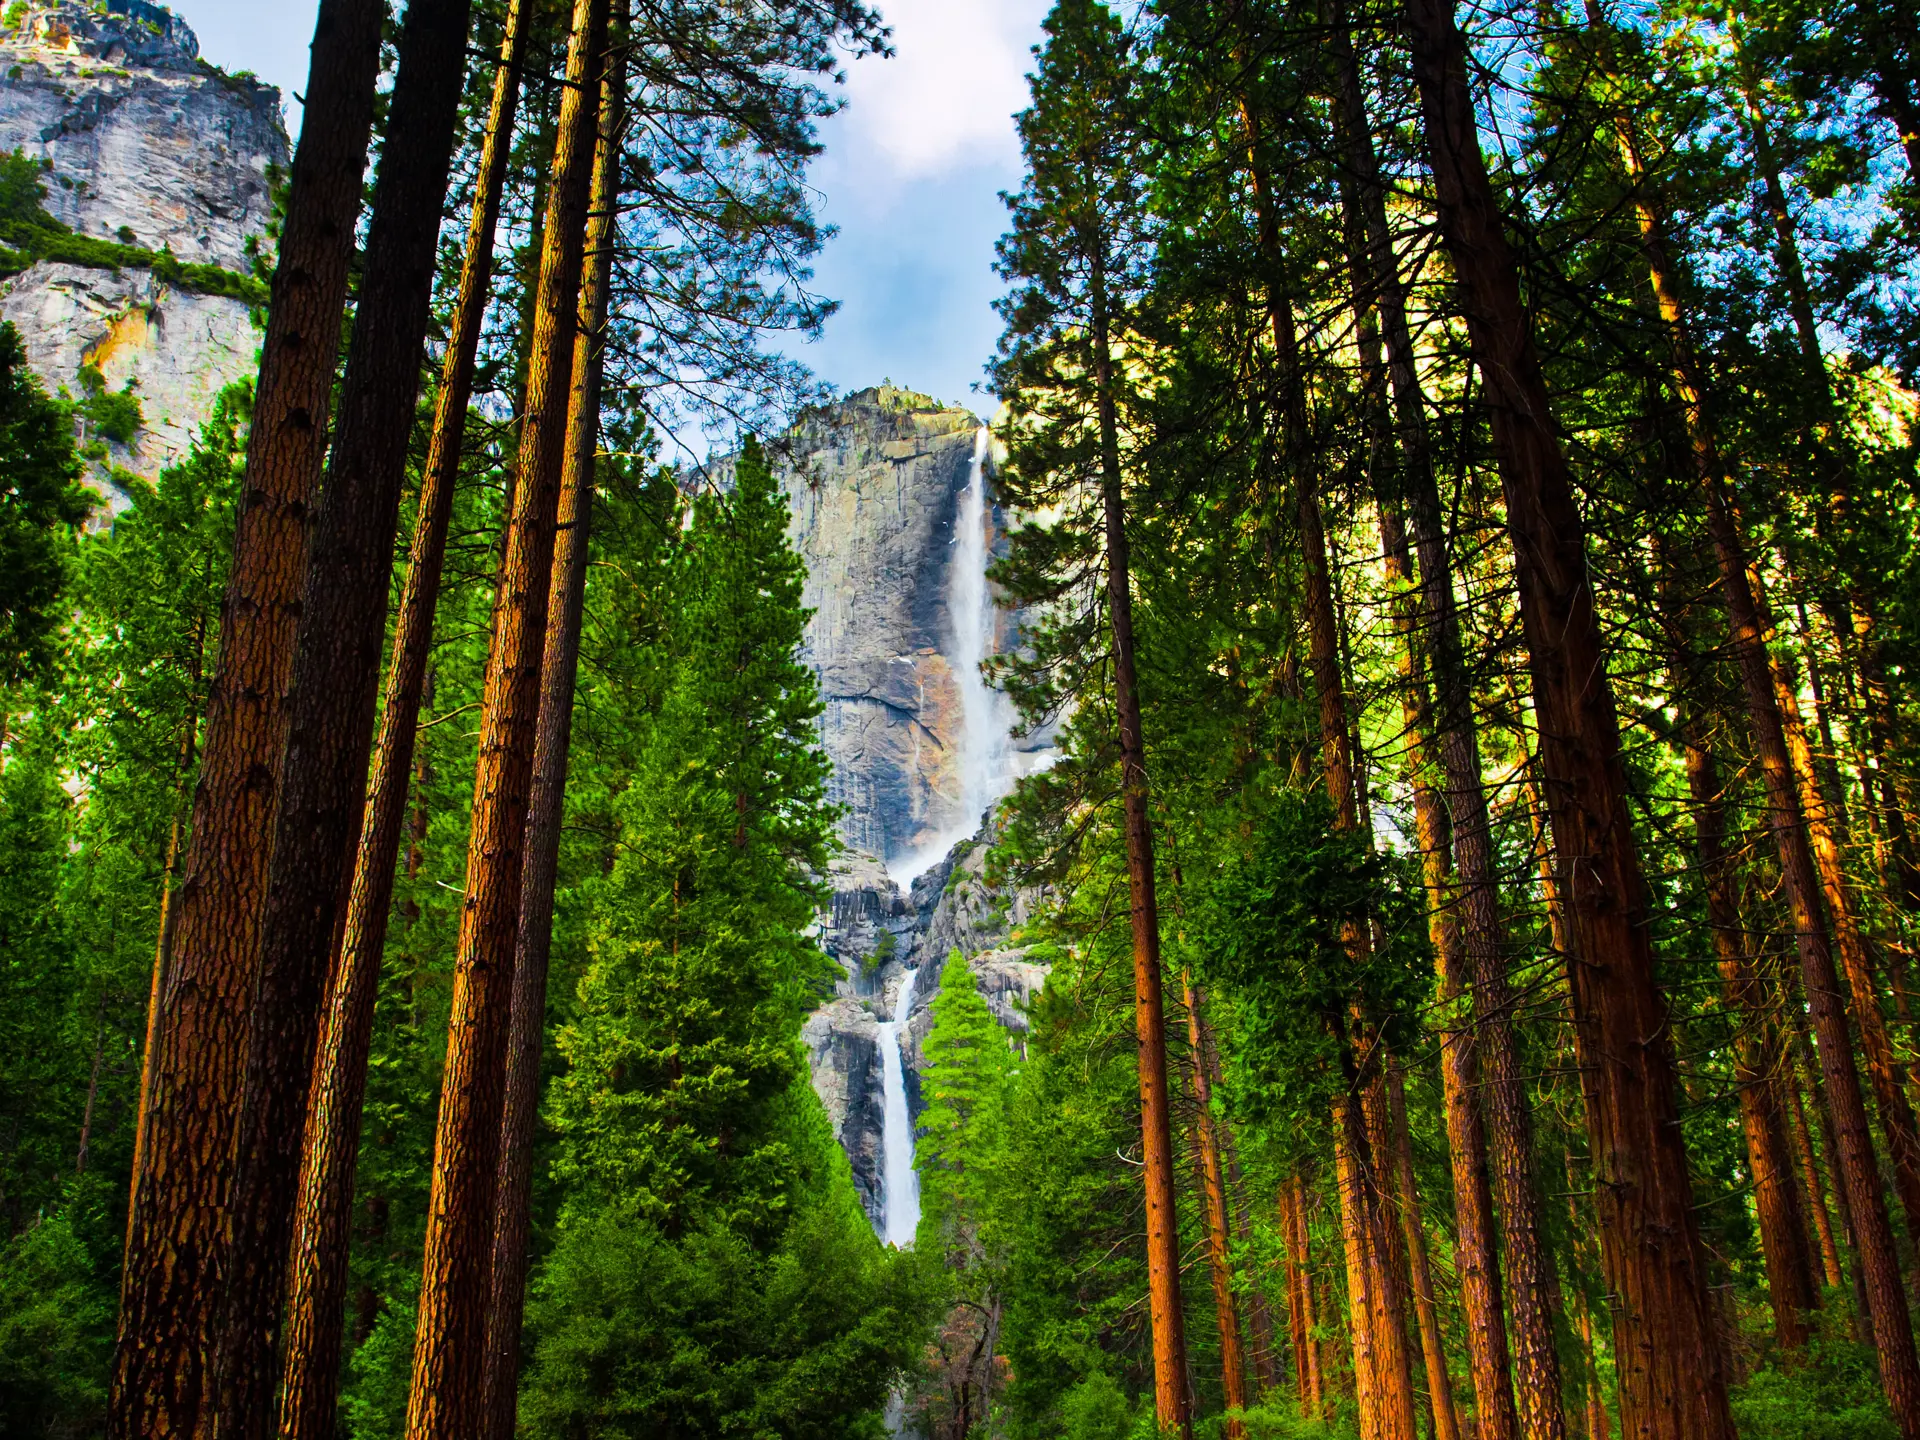 shutterstock_128950319 Yosemite Waterfalls behind Sequoias in Yosemite National Park,California.jpg